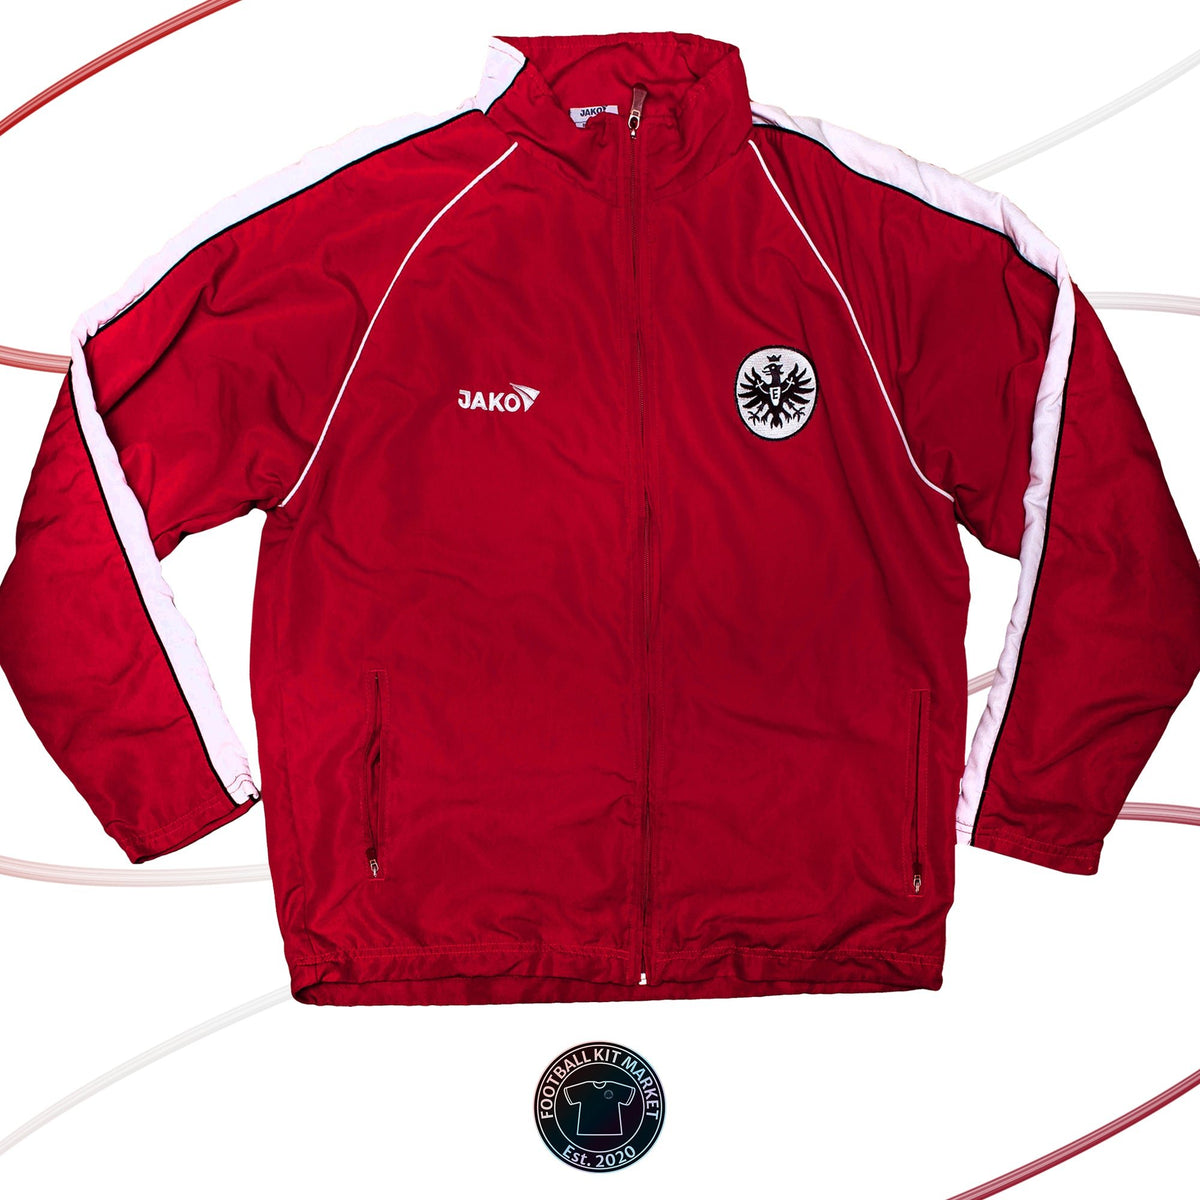 Genuine EINTRACHT FRANKFURT Jacket (2010s) - JAKO (XL) - Product Image from Football Kit Market